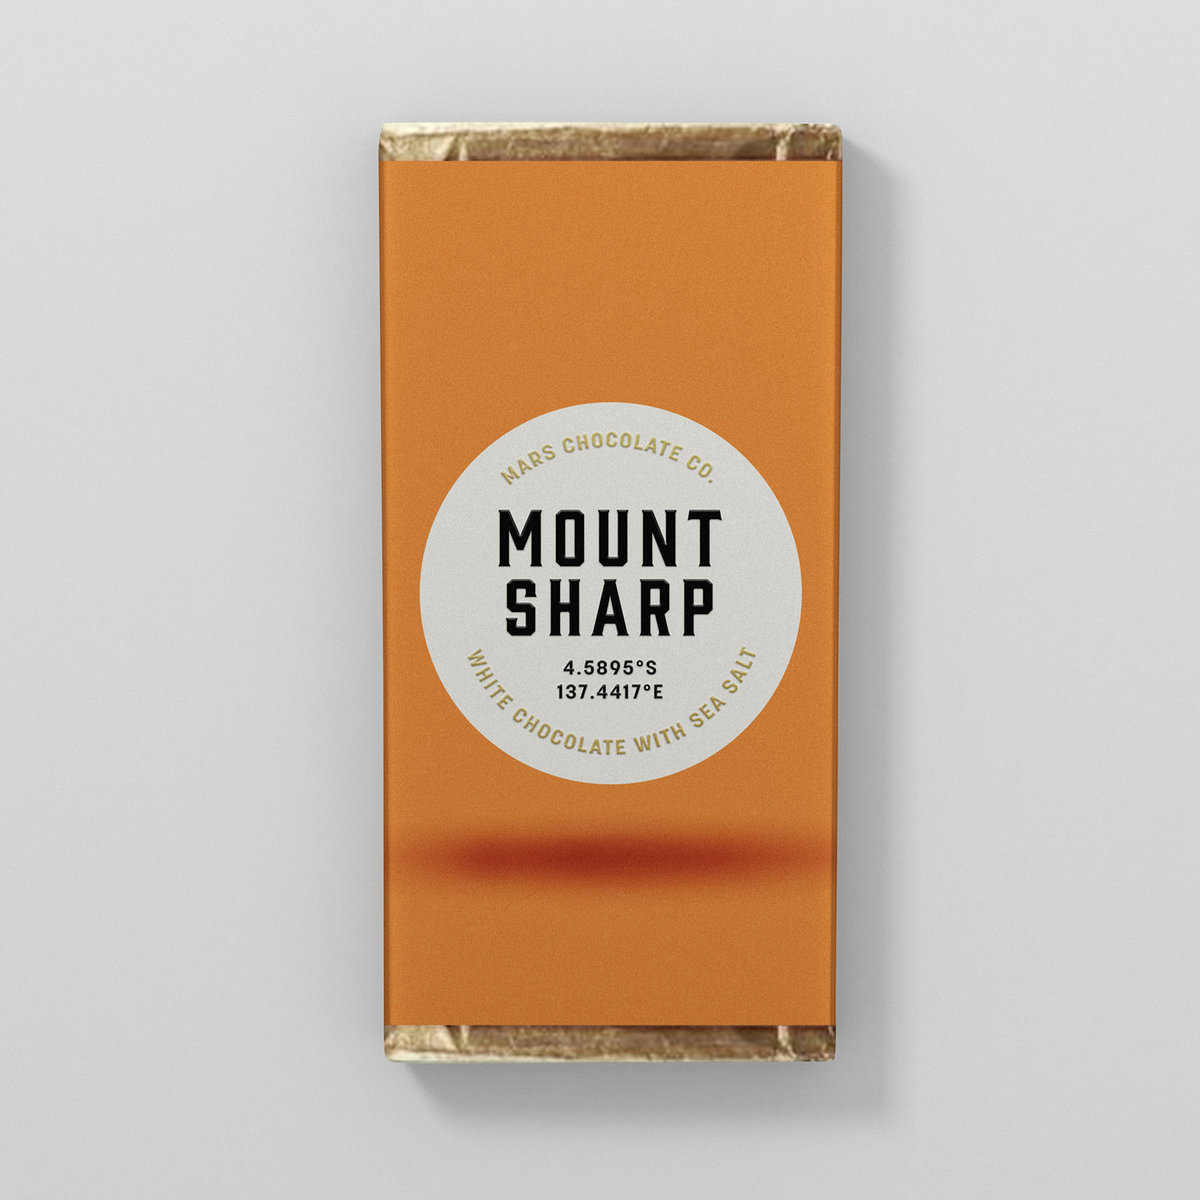 Mount Sharp – Chocolate From Mars